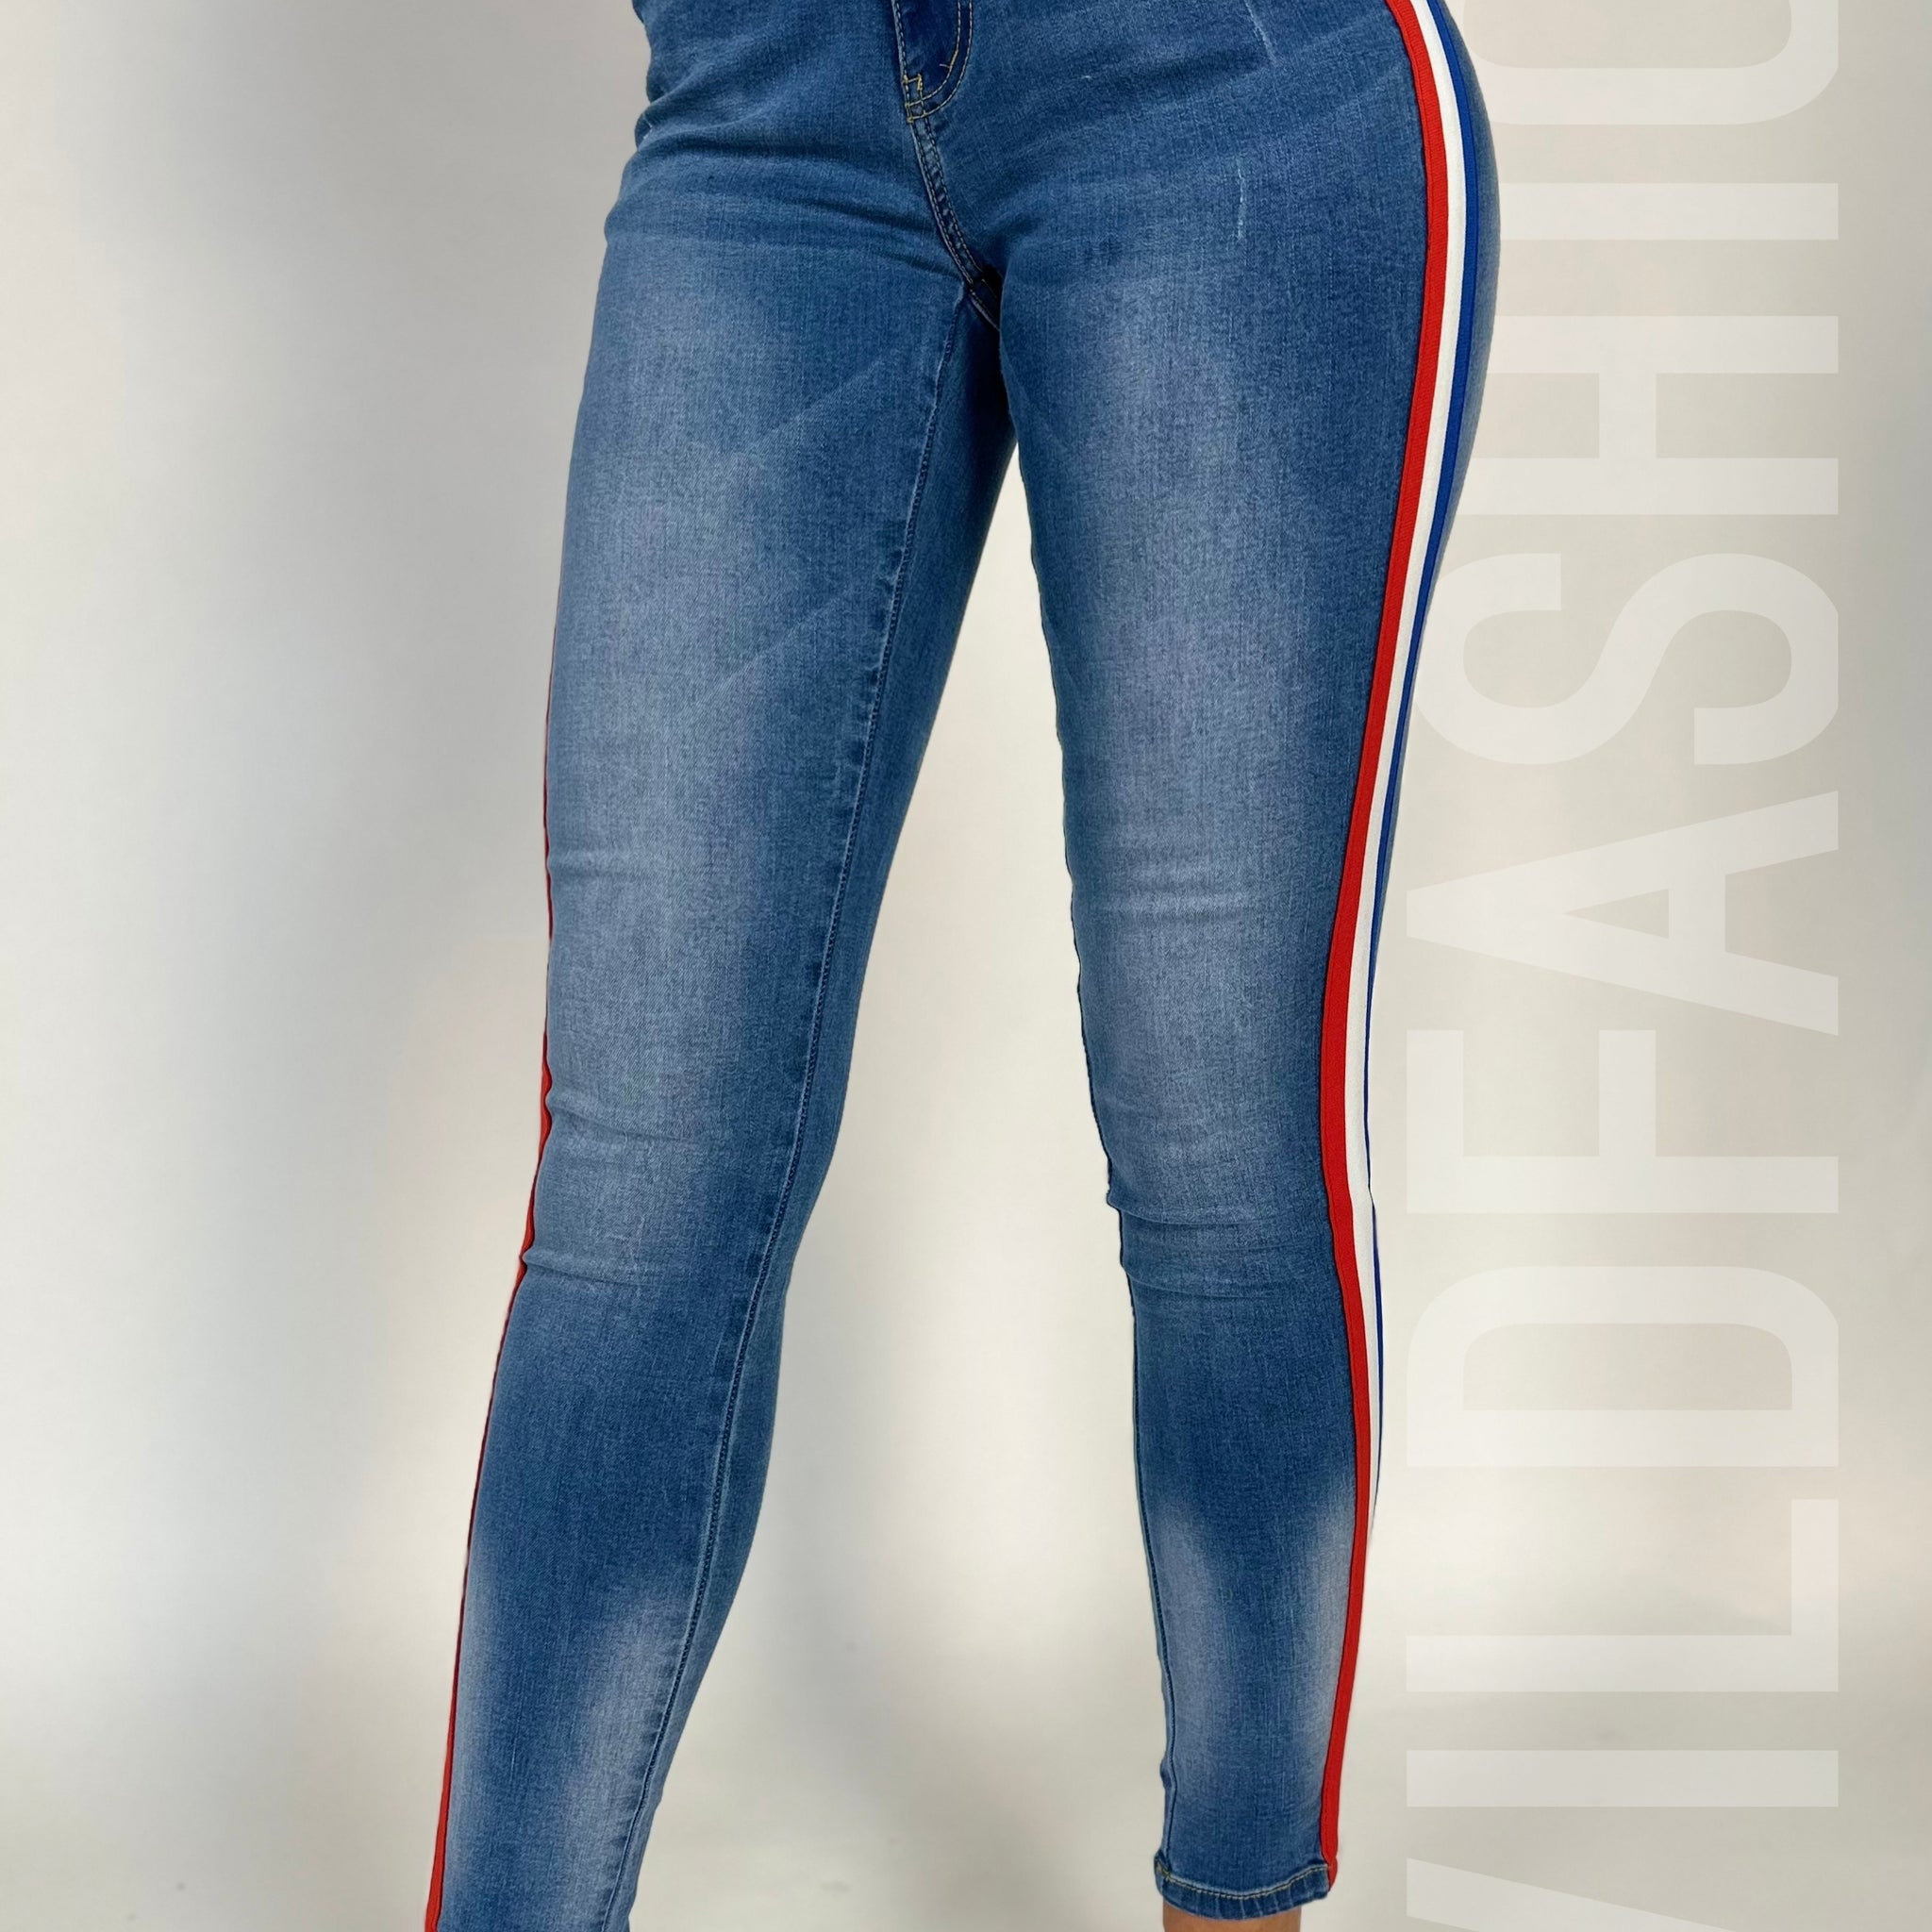 Jeans skinny cu talie inalta si banda colorata pe lateral CL840RR-411